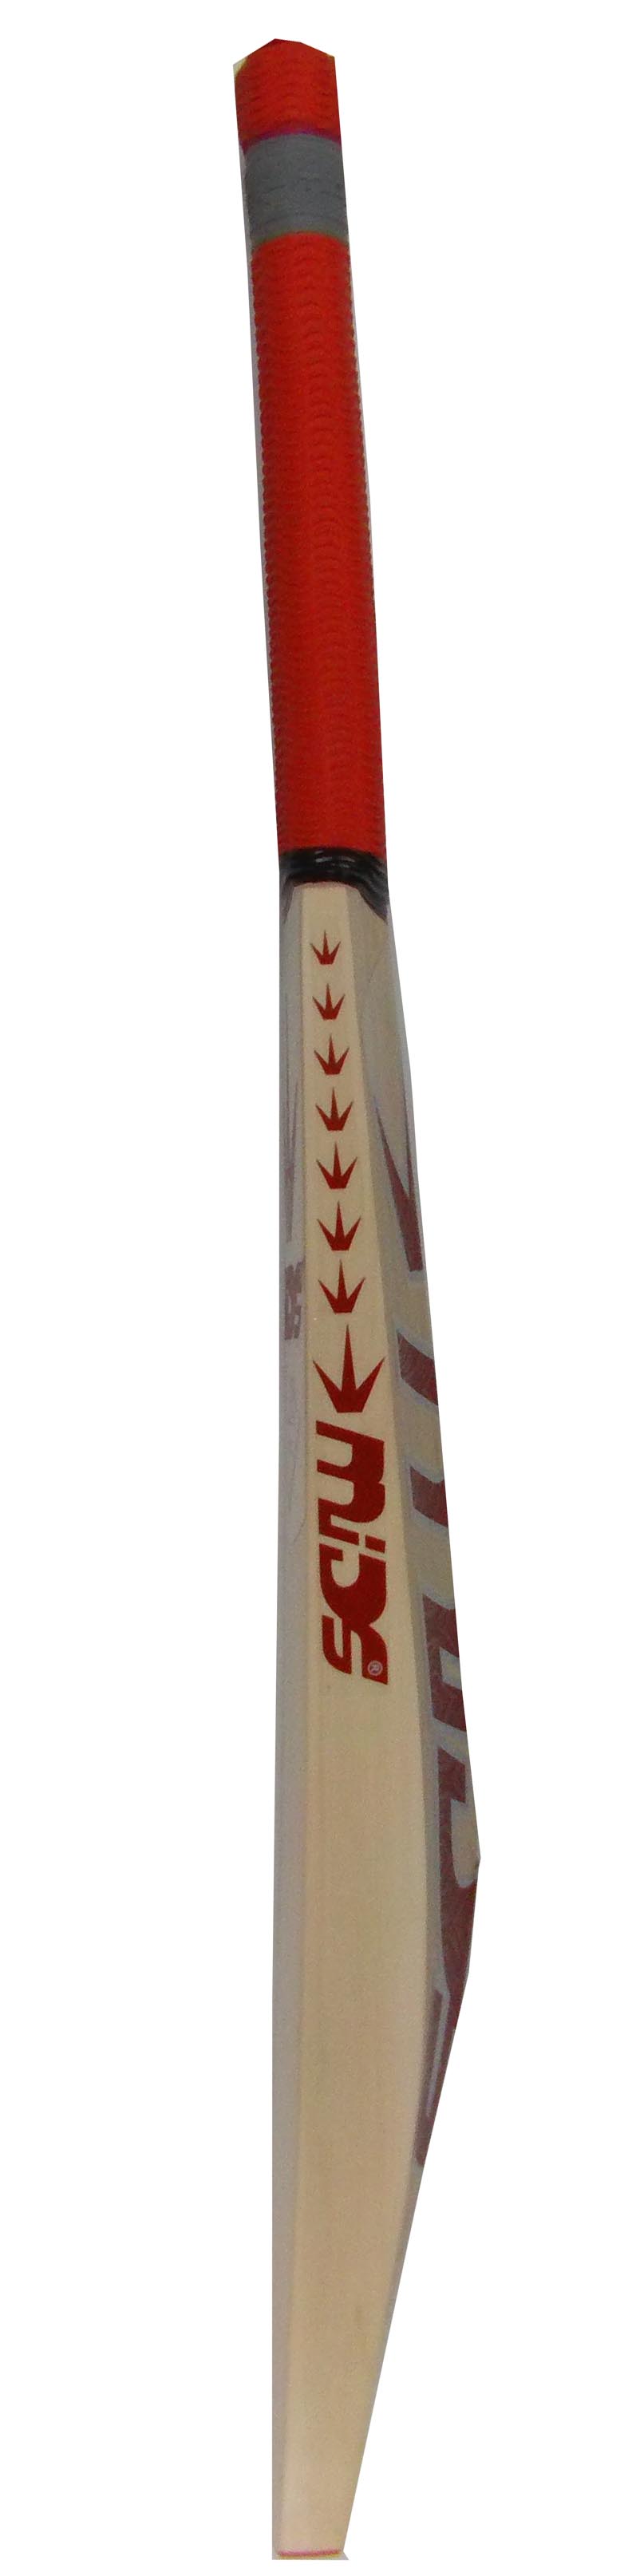 Mids Z Ten Grade 1 English Willow Cricket Bat RRP 399.00 SH Free bag